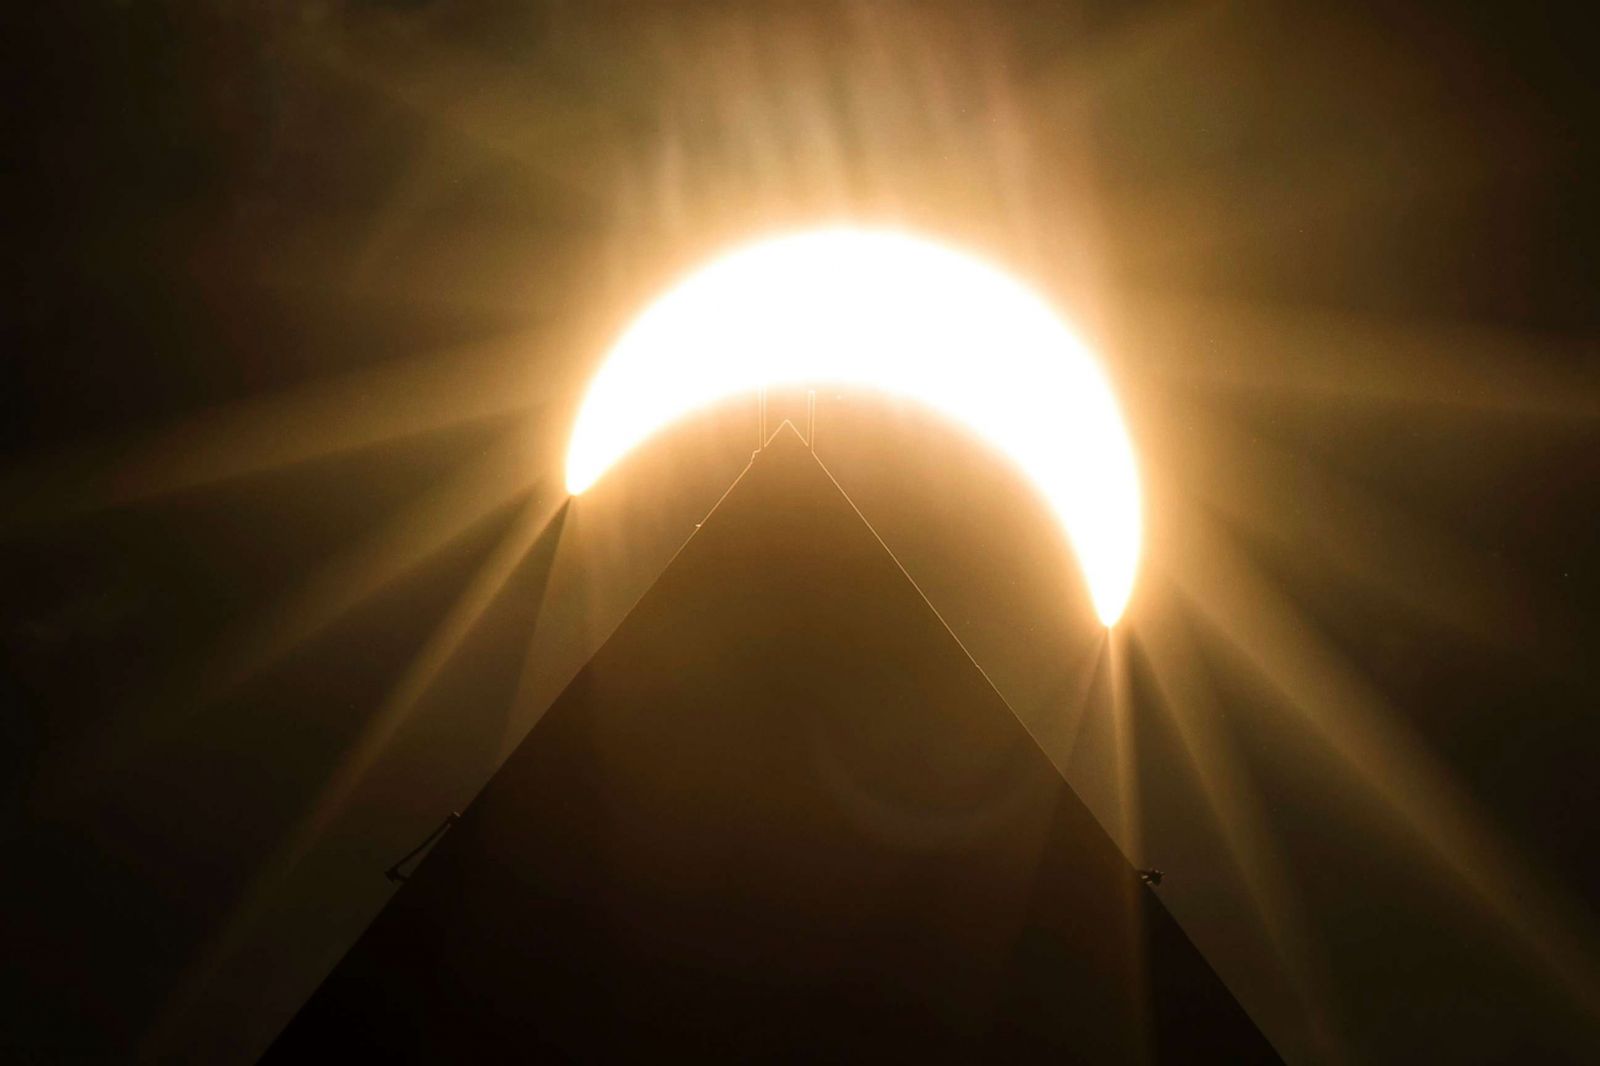 Outofthis world photos of the 2017 solar eclipse Photos ABC News